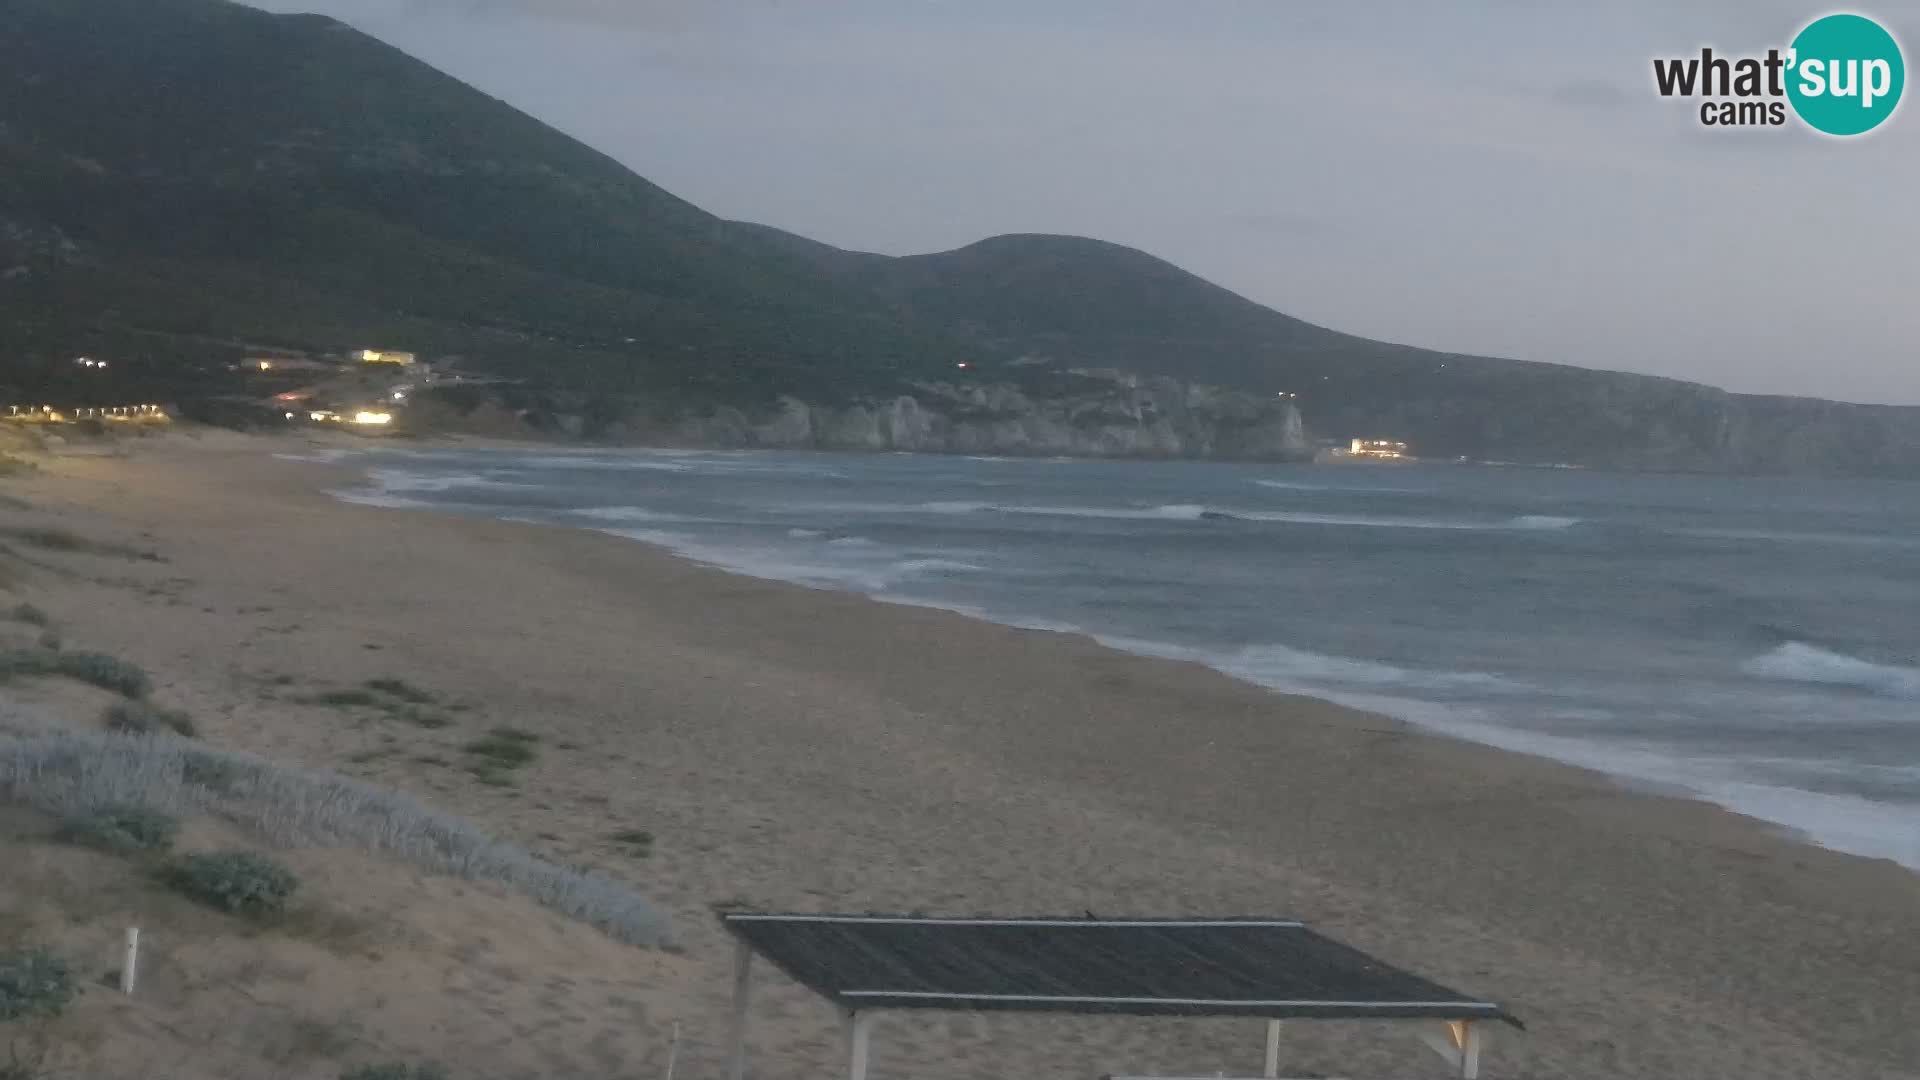 Live Beach Webcam San Nicolò, Buggerru, Sardinia – Watch the Waves and Sunset